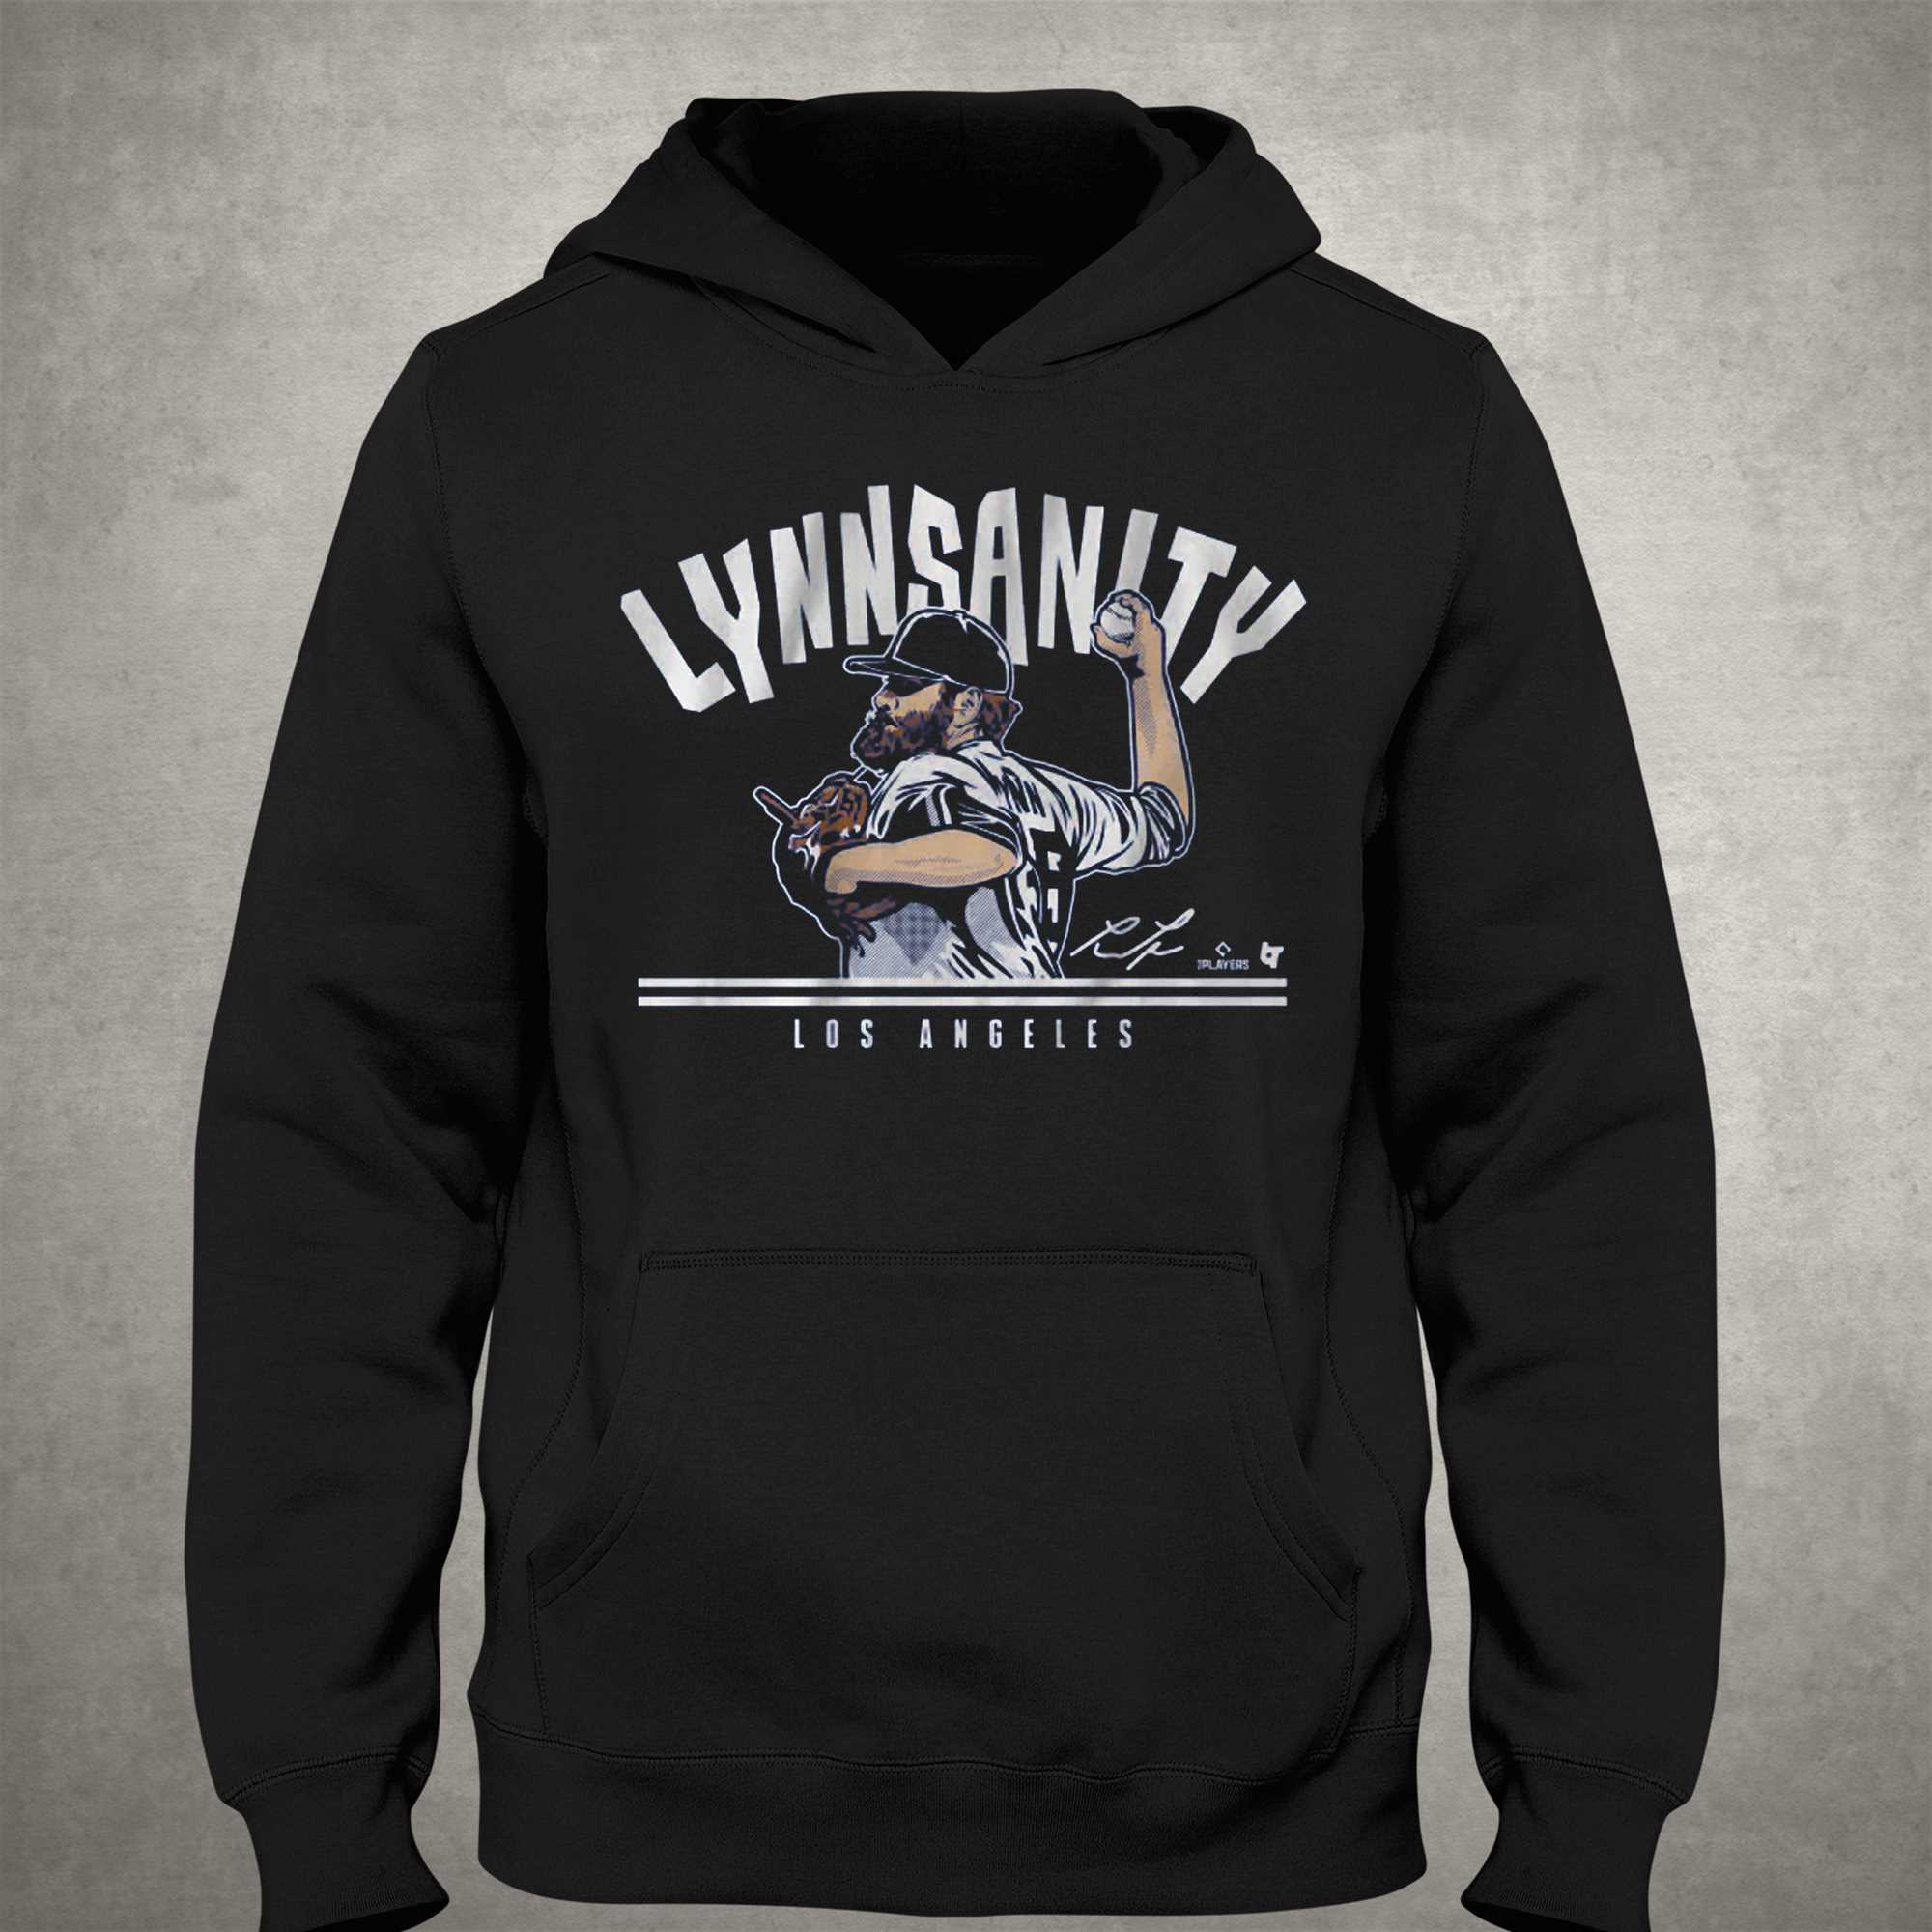 Lance Lynn: LA Lynnsanity - Los Angeles Baseball T-Shirt